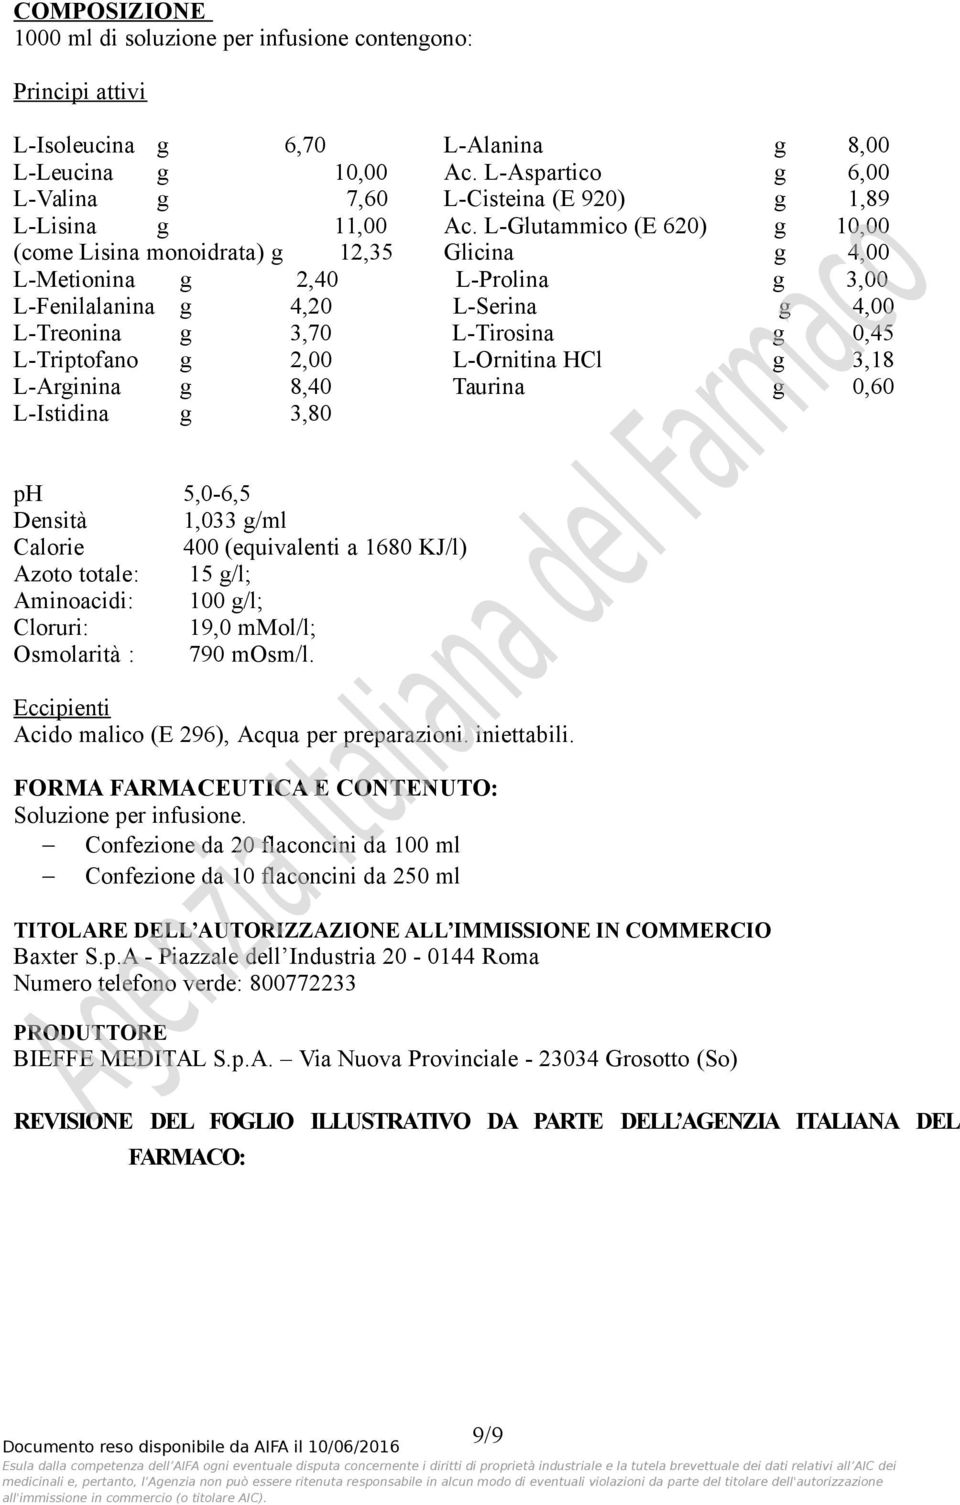 L-Glutammico (E 620) g 10,00 (come Lisina monoidrata) g 12,35 Glicina g 4,00 L-Metionina g 2,40 L-Prolina g 3,00 L-Fenilalanina g 4,20 L-Serina g 4,00 L-Treonina g 3,70 L-Tirosina g 0,45 L-Triptofano